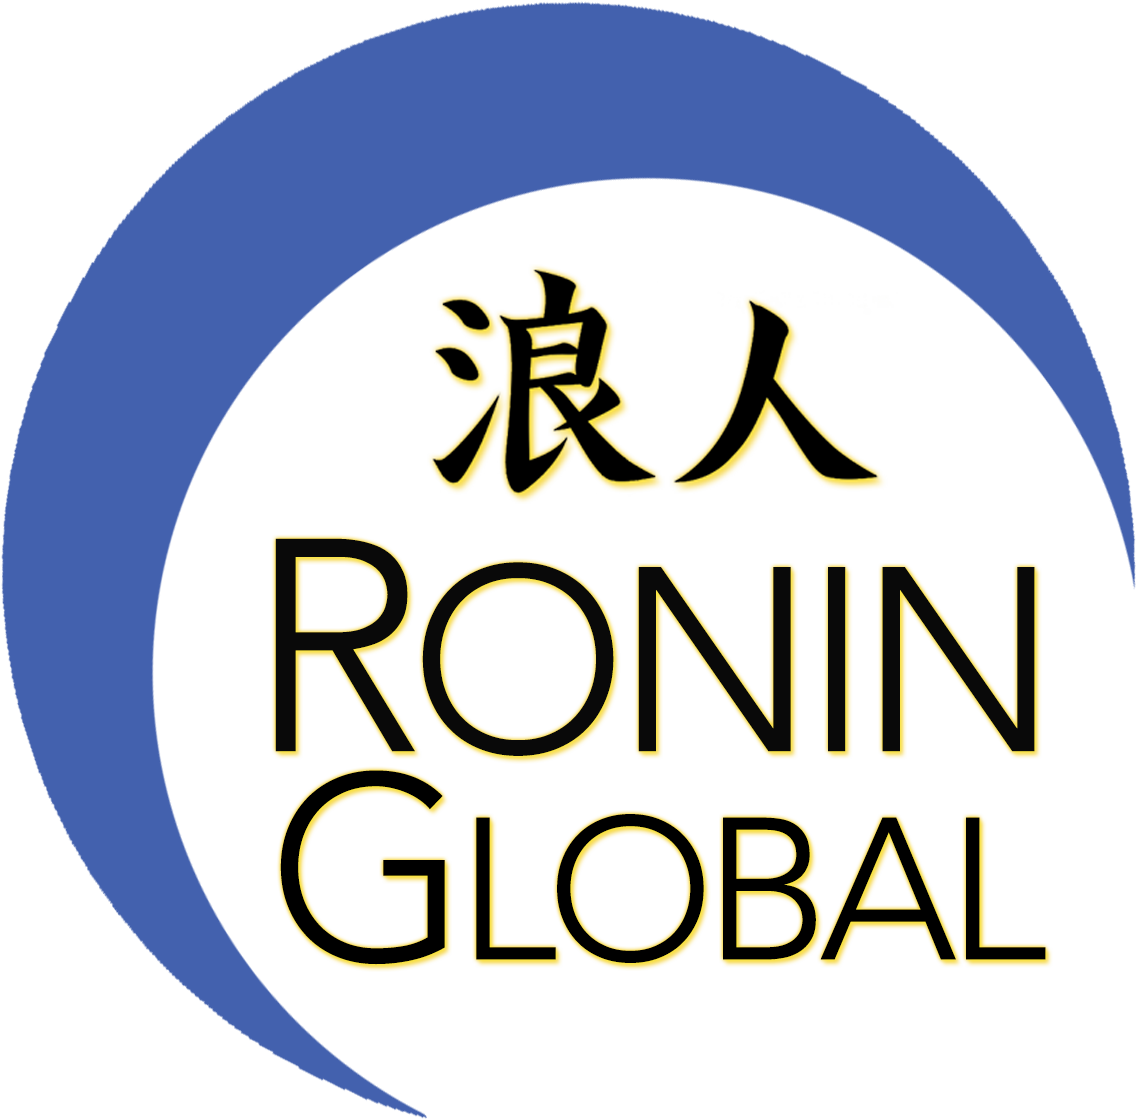 Ronin Global